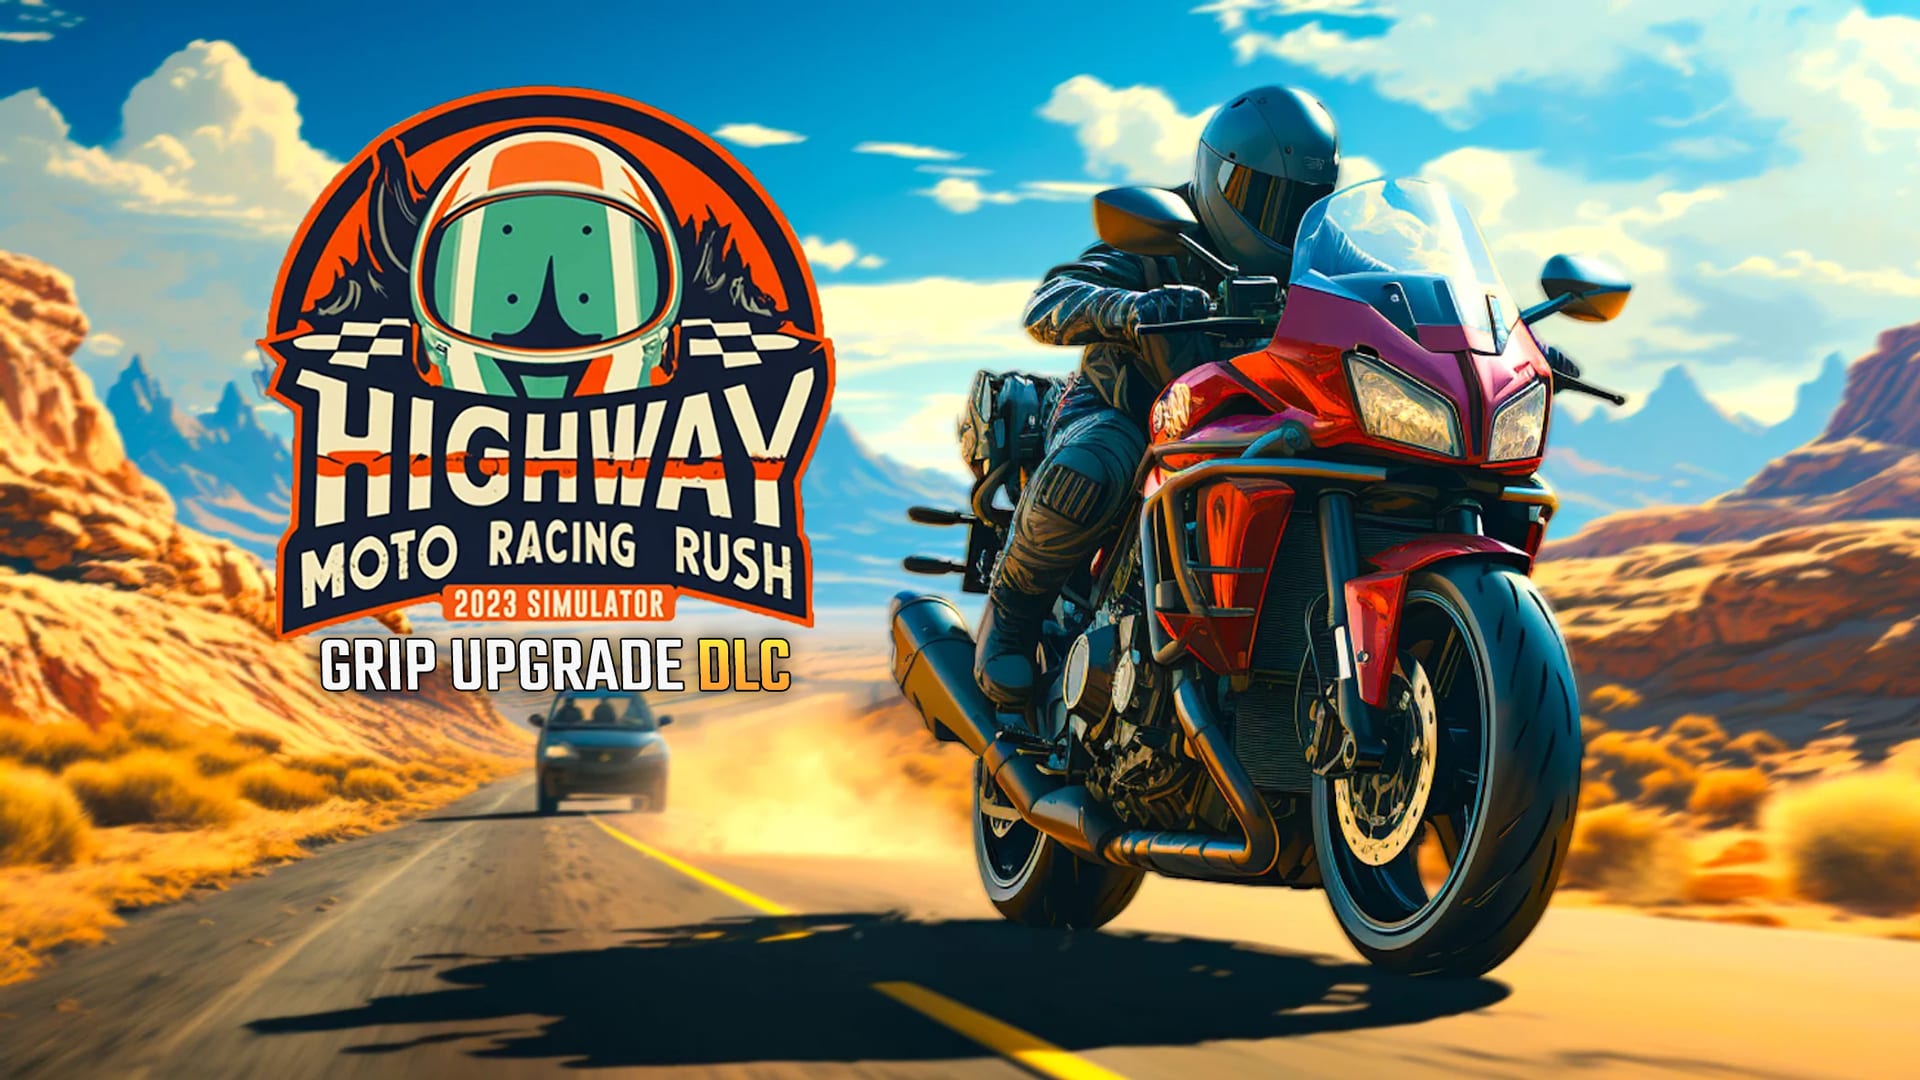 Highway Moto Racing Rush 2023 Simulator - Grip Upgrade DLC